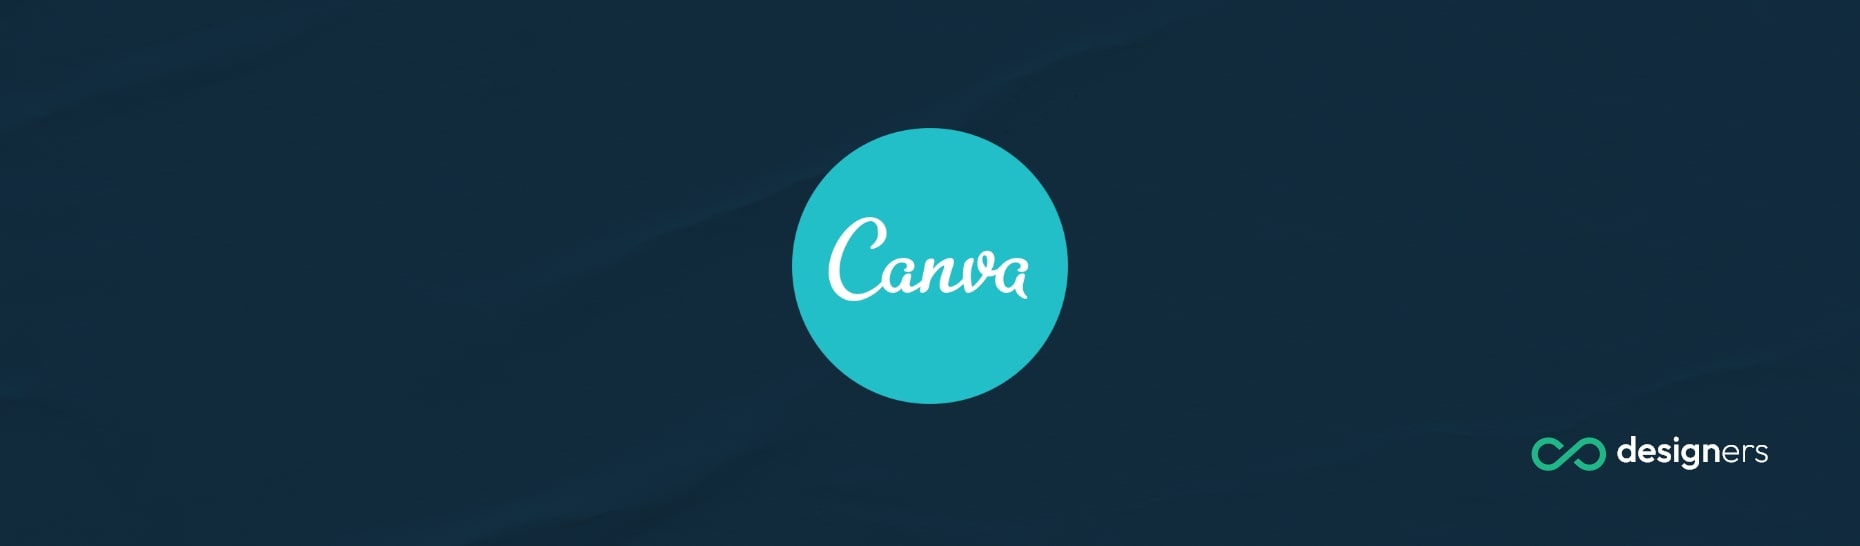 How Do I Use Canva on Amazon? 